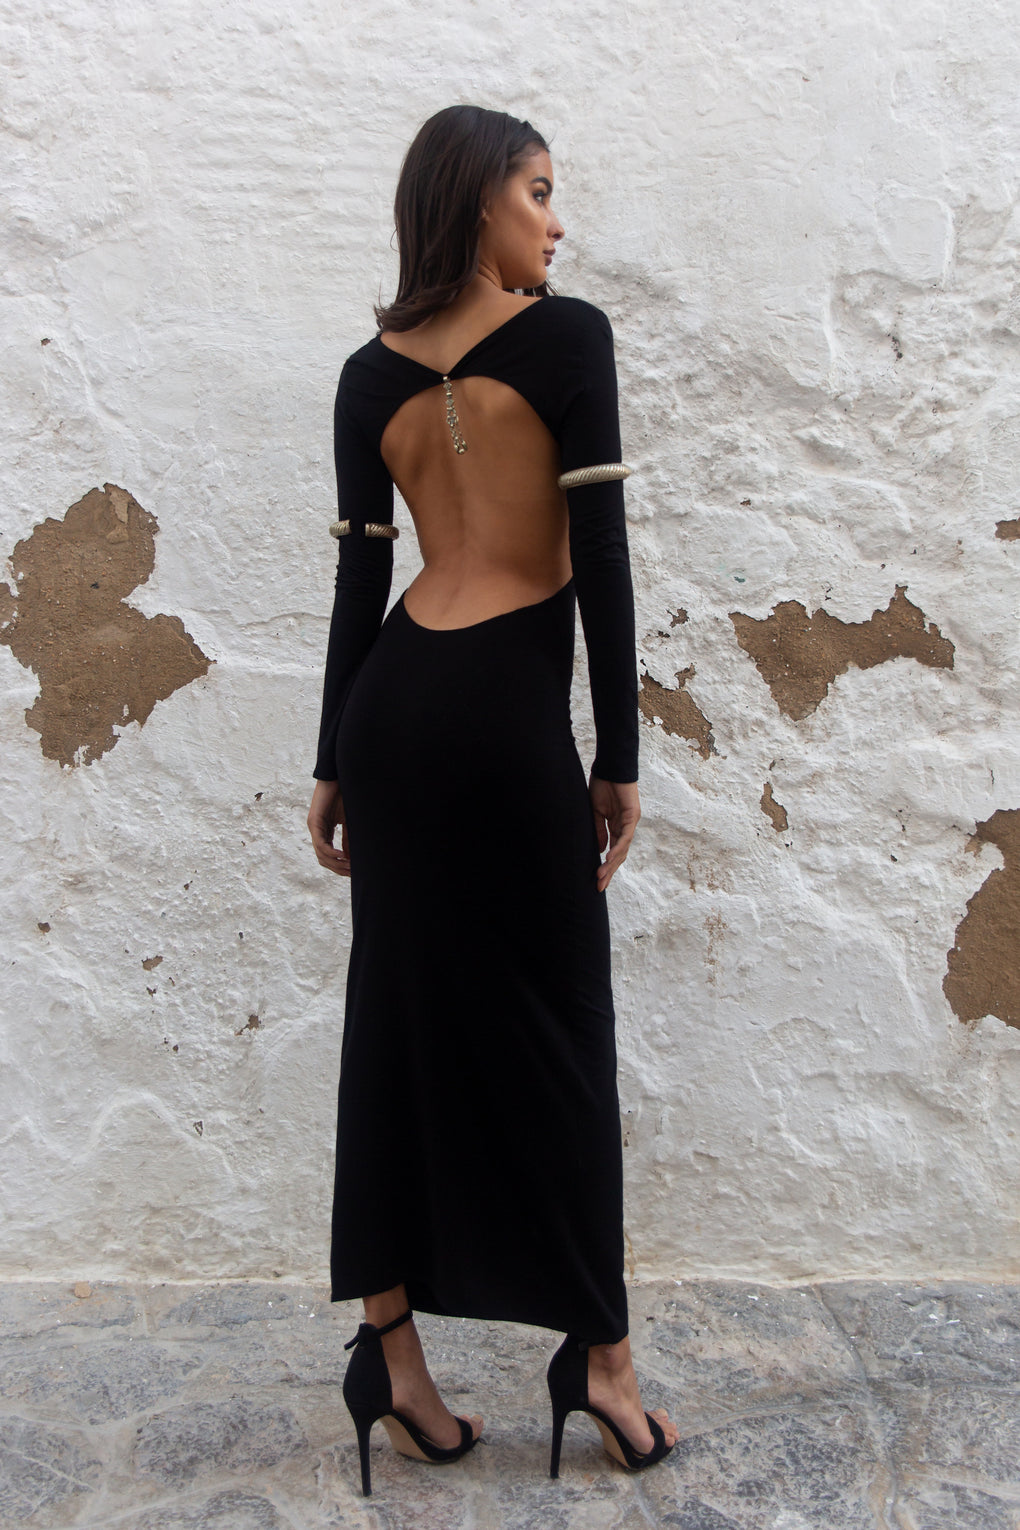 Esha Gupta Slips Into A Black Backless Gown At IIFA 2023 - SEE PICS